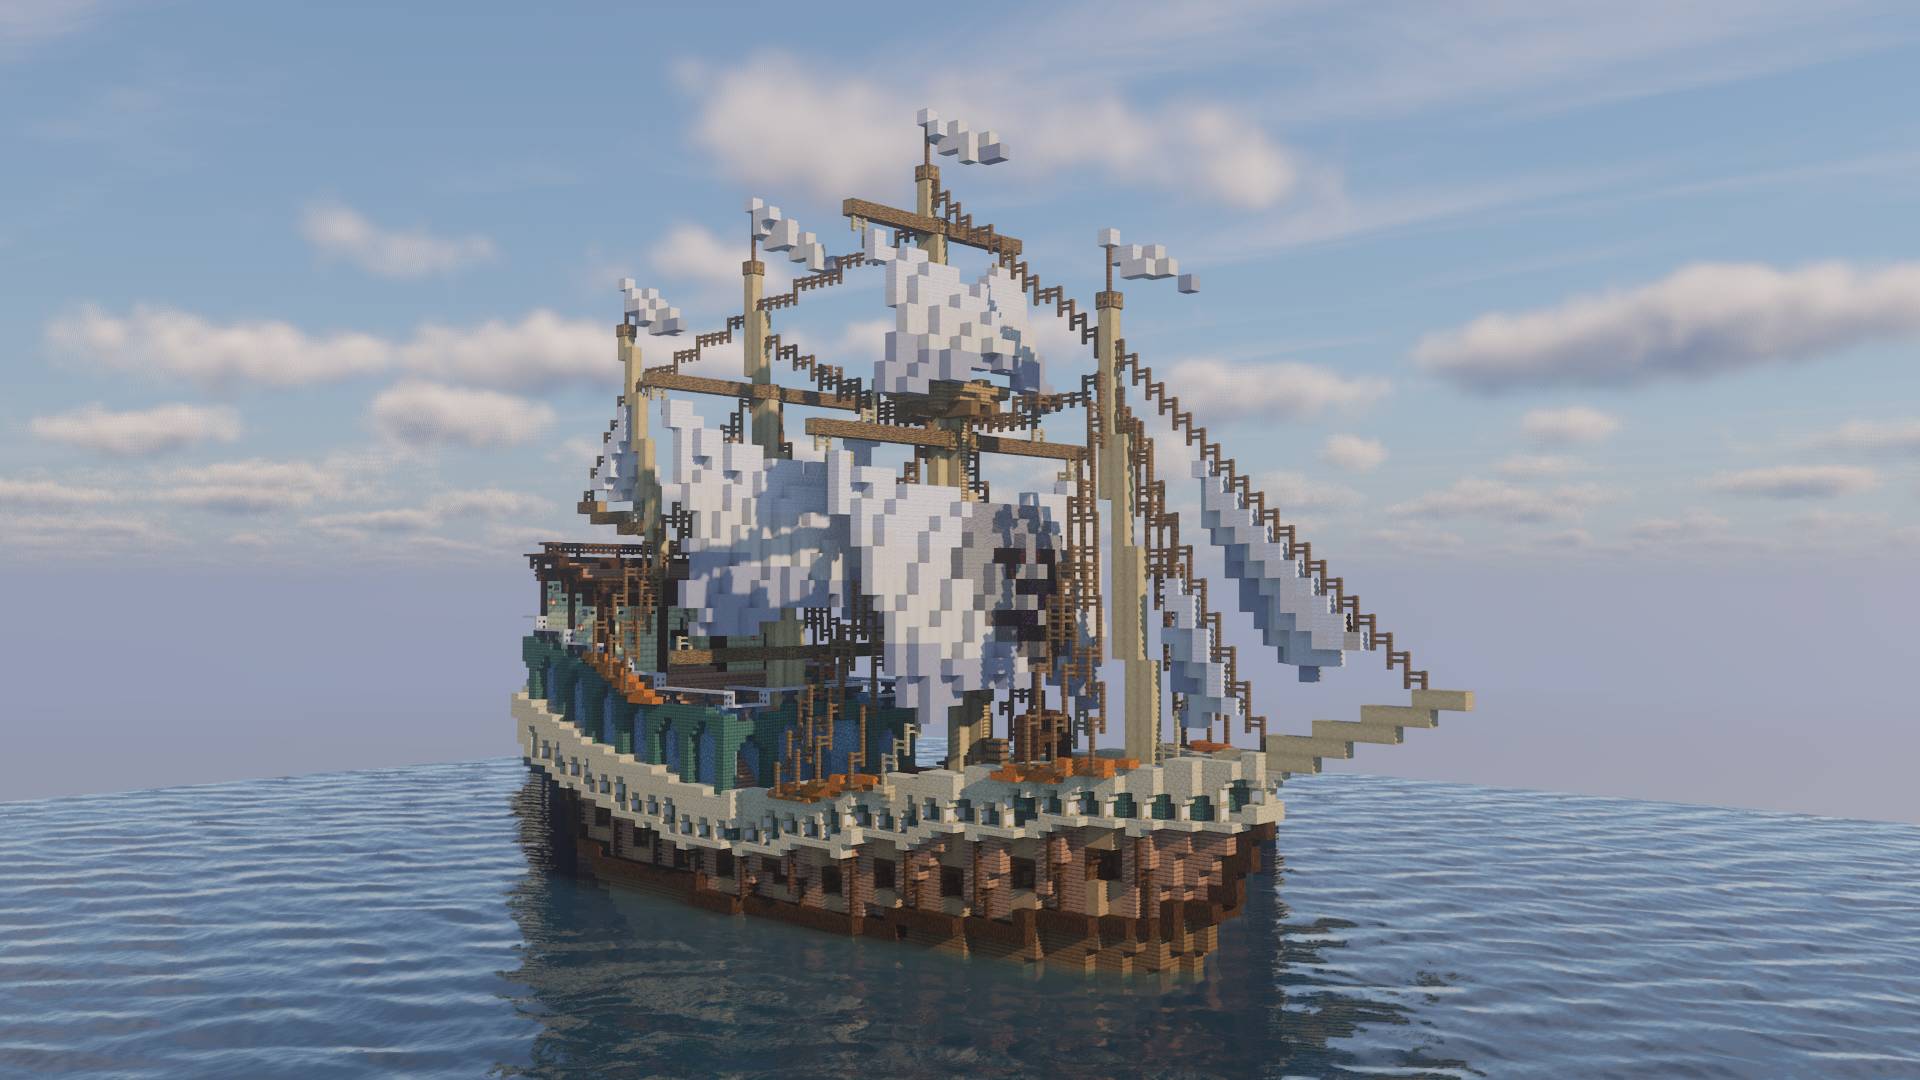 Pireate hijacked Spanish Galleon